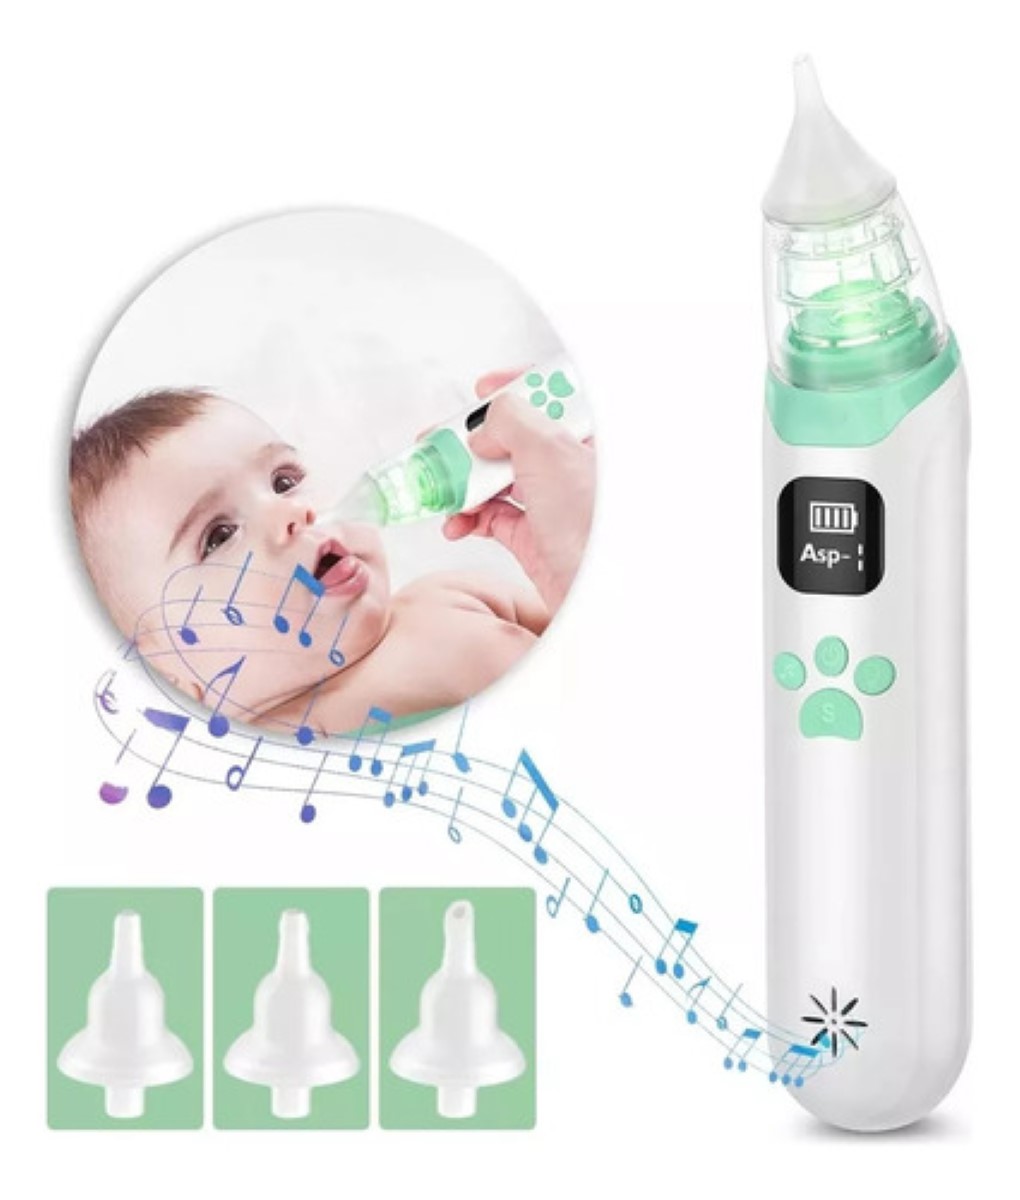 Aspirador Nasal, Aspirador Nasal Bebe Electrico con Luz LED Aspirador Nasal  Electrico Carga USB de 3 Niveles Succión 4 Puntas de para Recién Nacidos